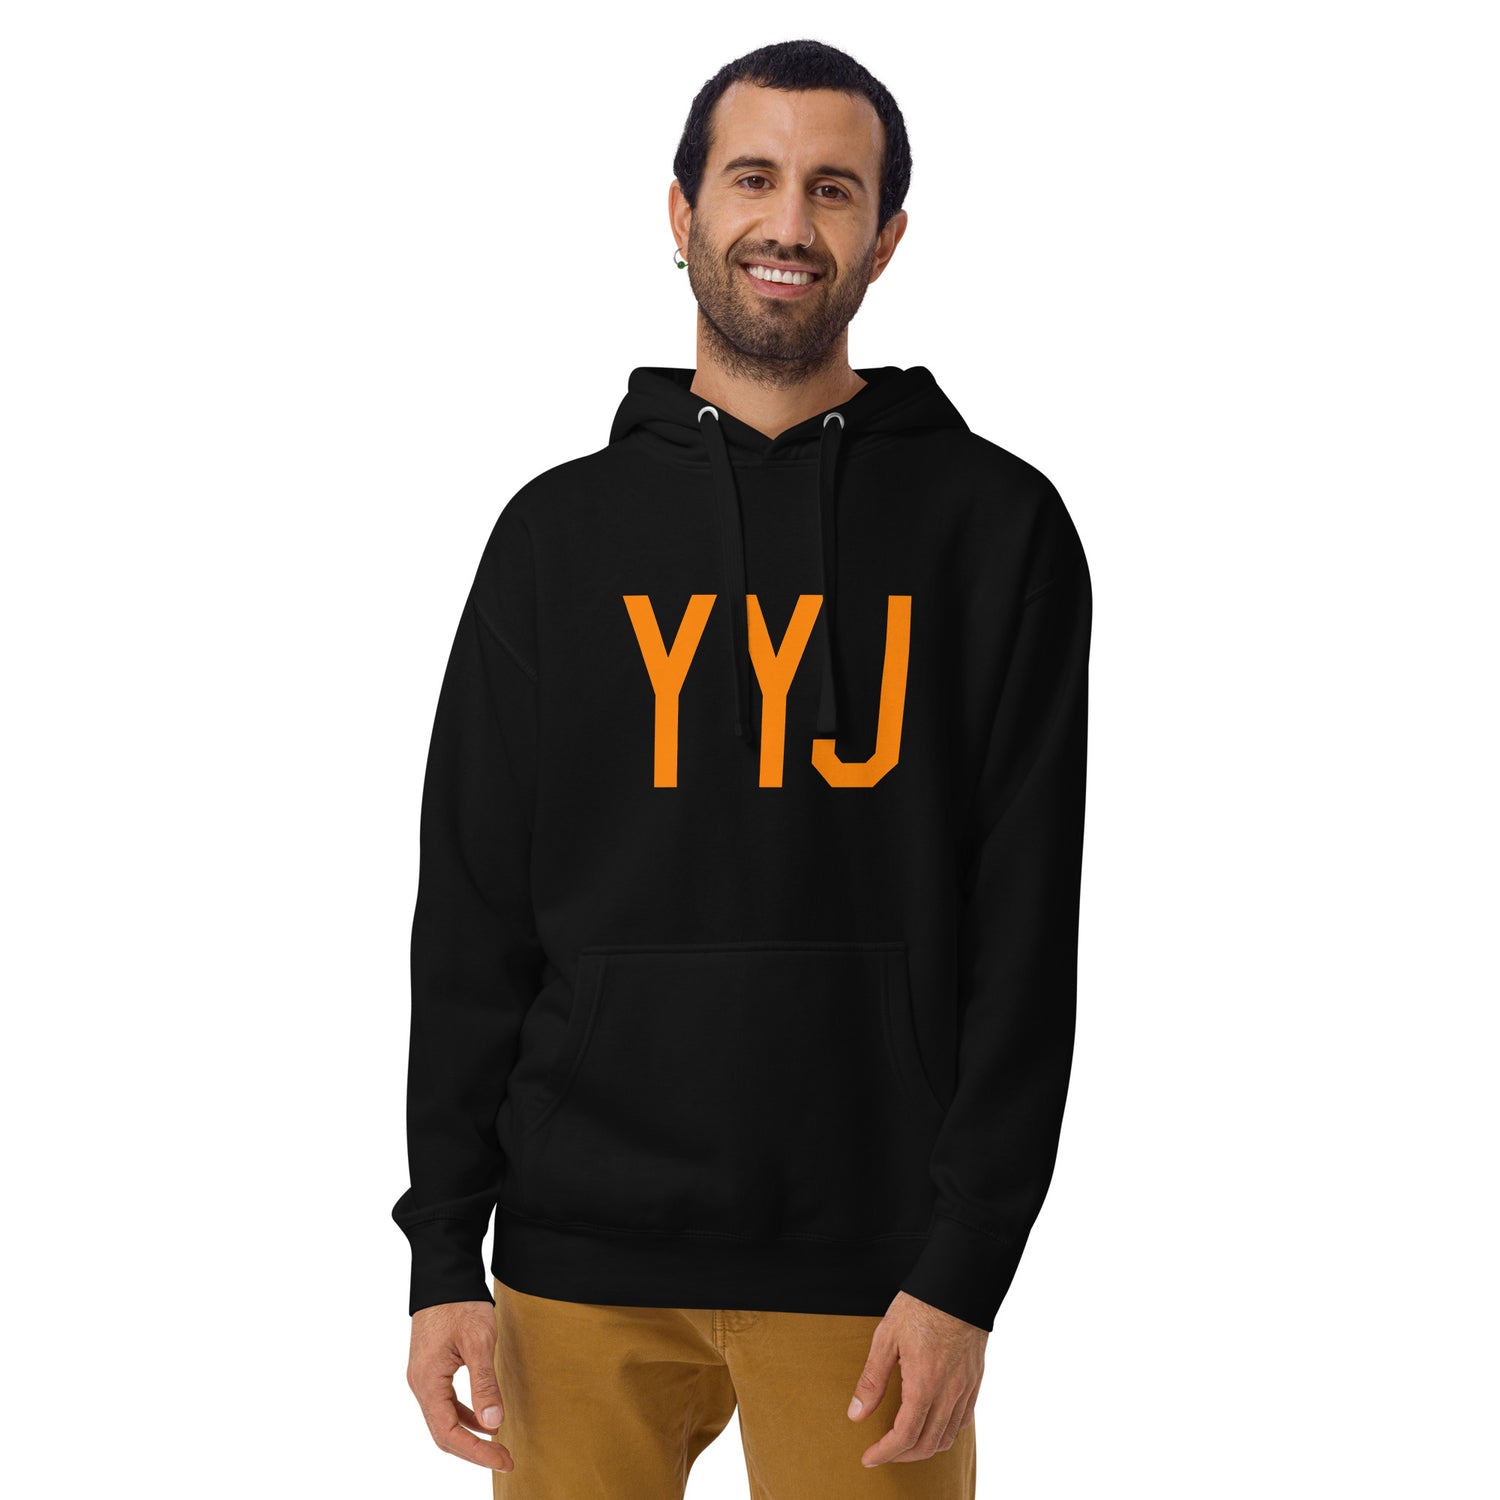 Victoria British Columbia Hoodies and Sweatshirts • YYJ Airport Code